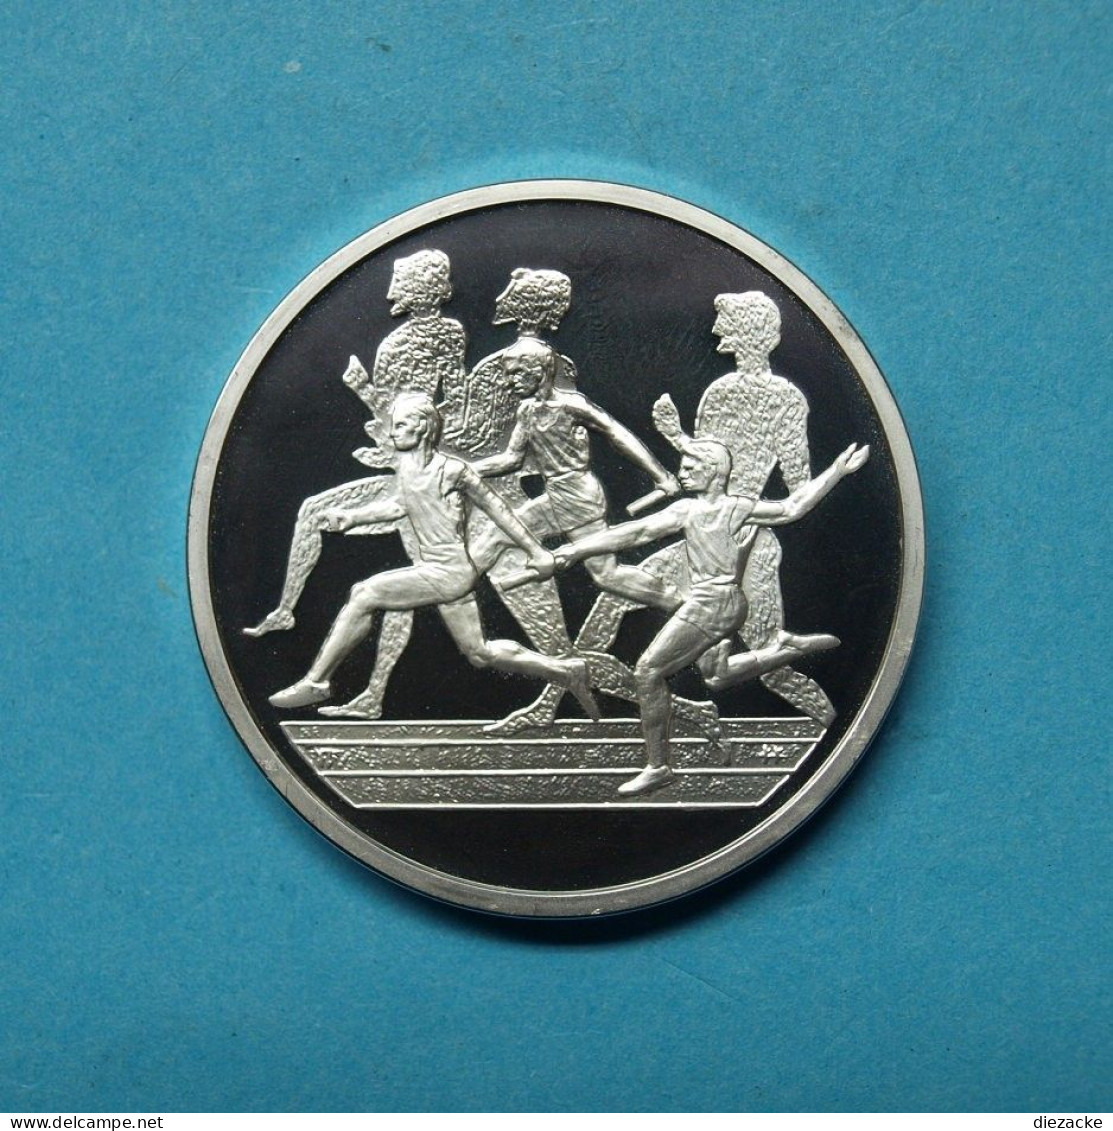 Griechenland 2004 10 Euro Olympiade Athen Laufen 925er Silber PP (M4201 - Greece